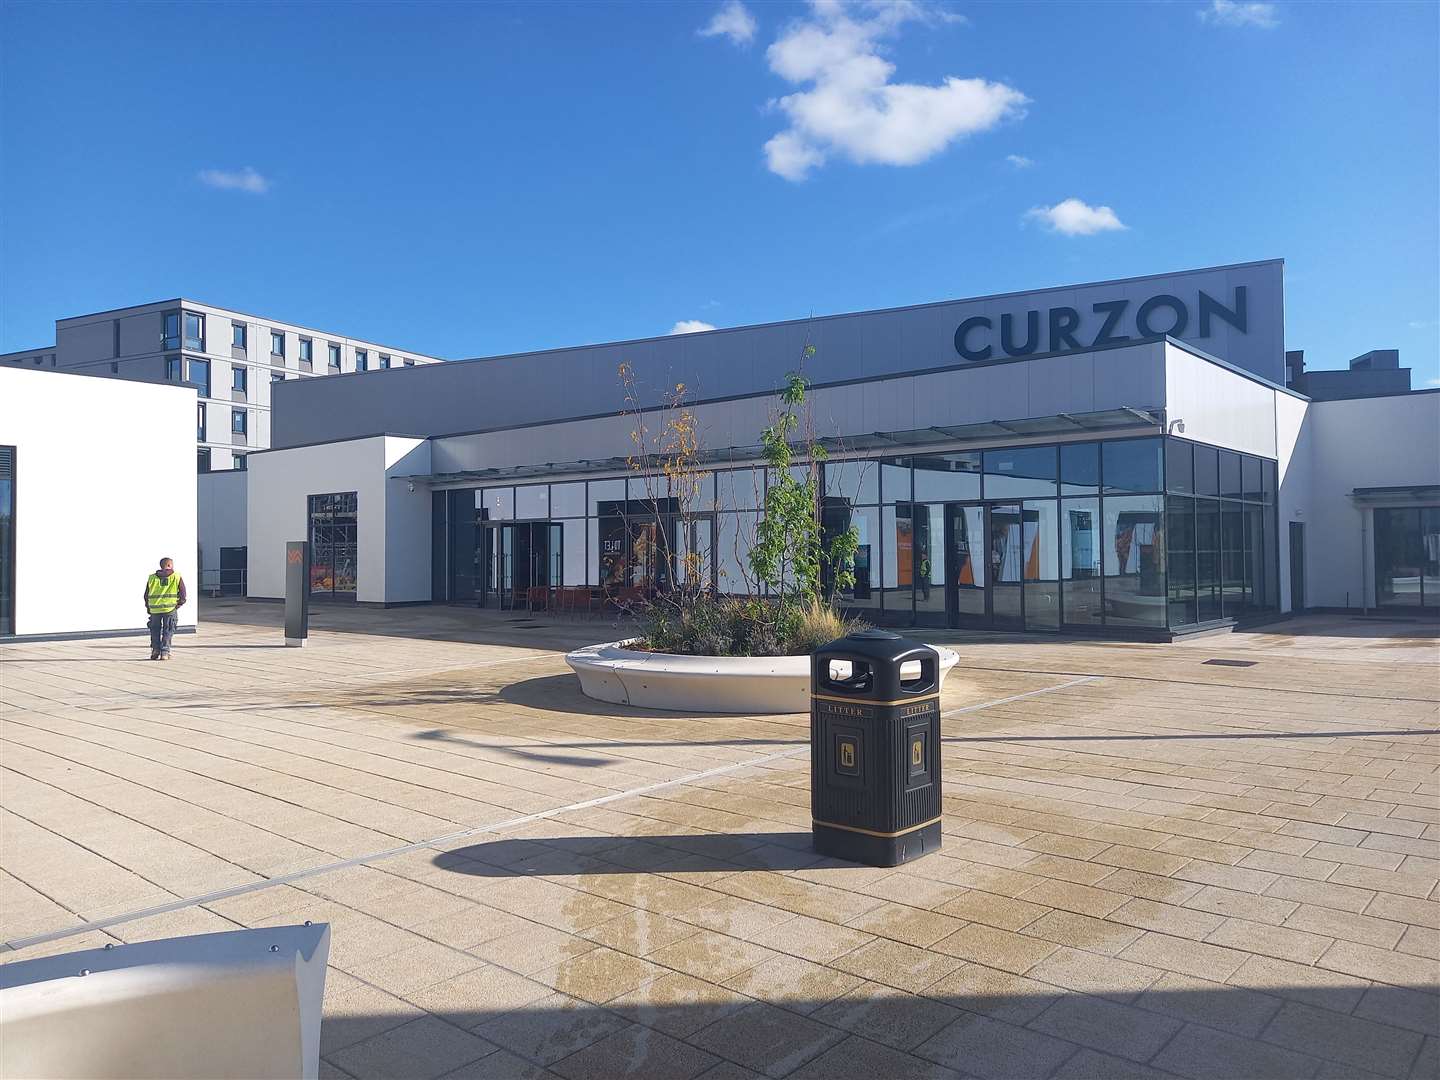 The five-screen Curzon cinema at Canterbury's Riverside development